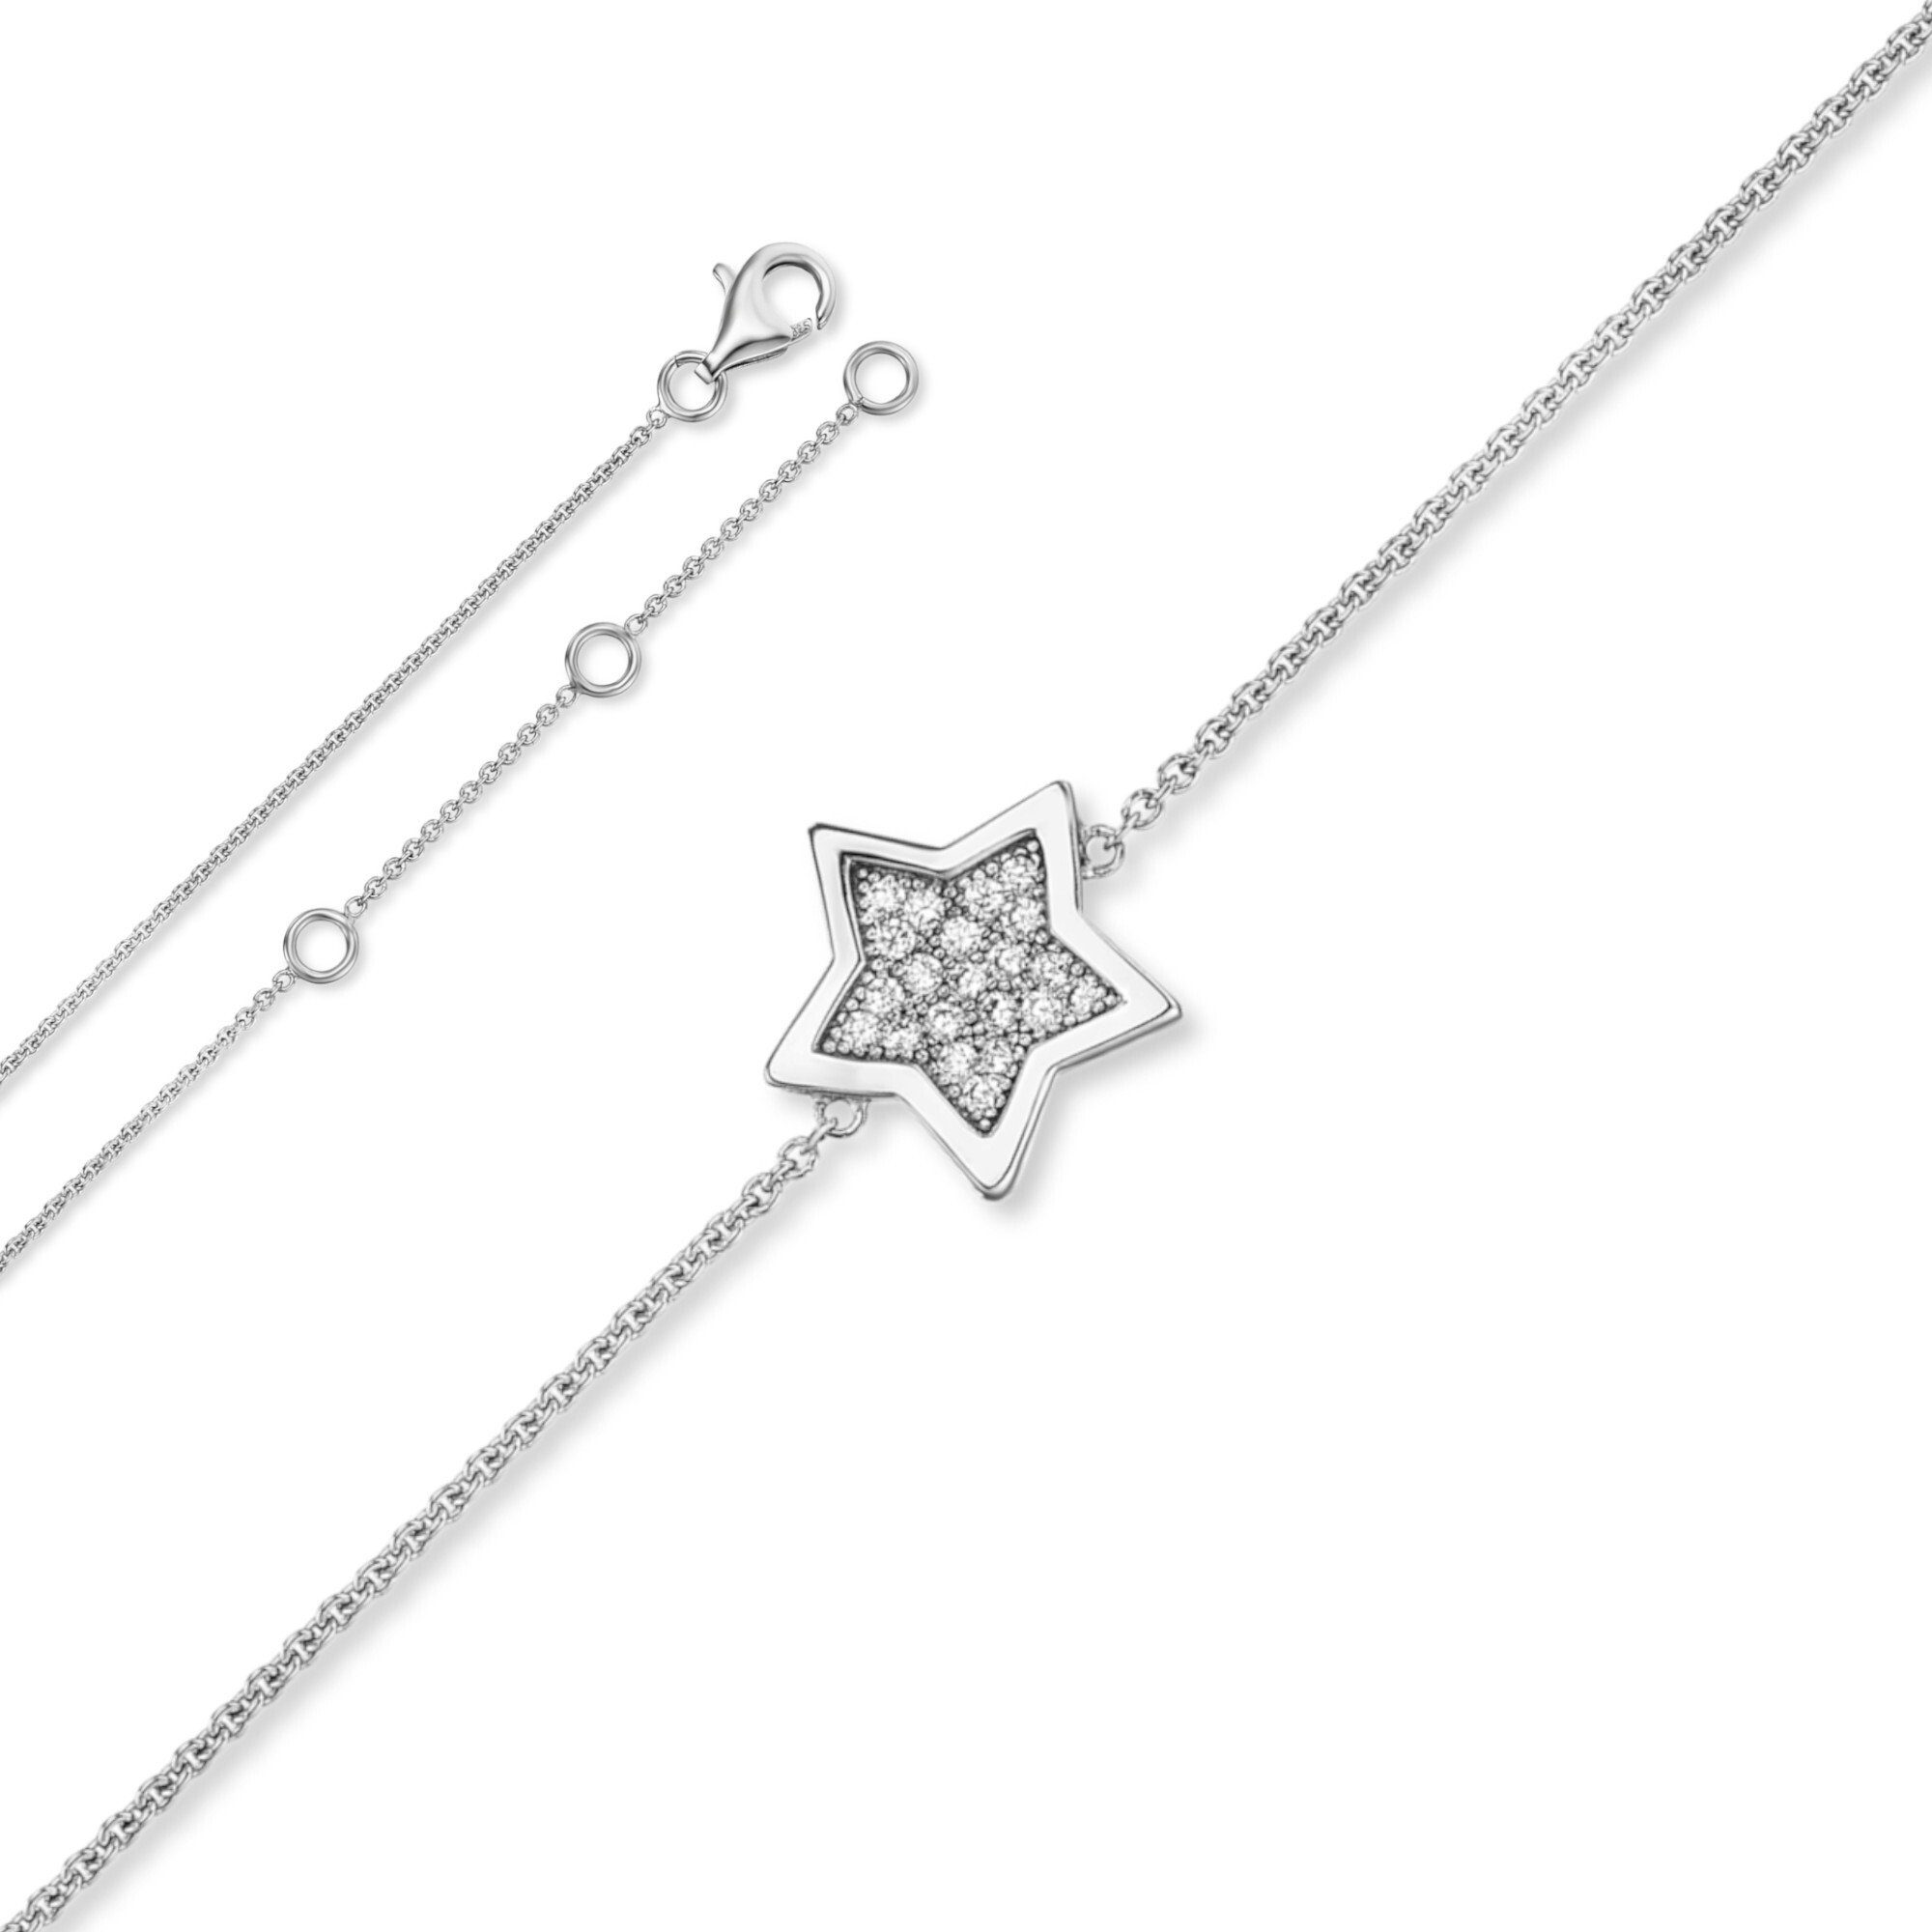 ONE ELEMENT Silberarmband Zirkonia Stern Armband aus 925 Silber 18 cm Ø, Damen Silber Schmuck Stern | Silberarmbänder